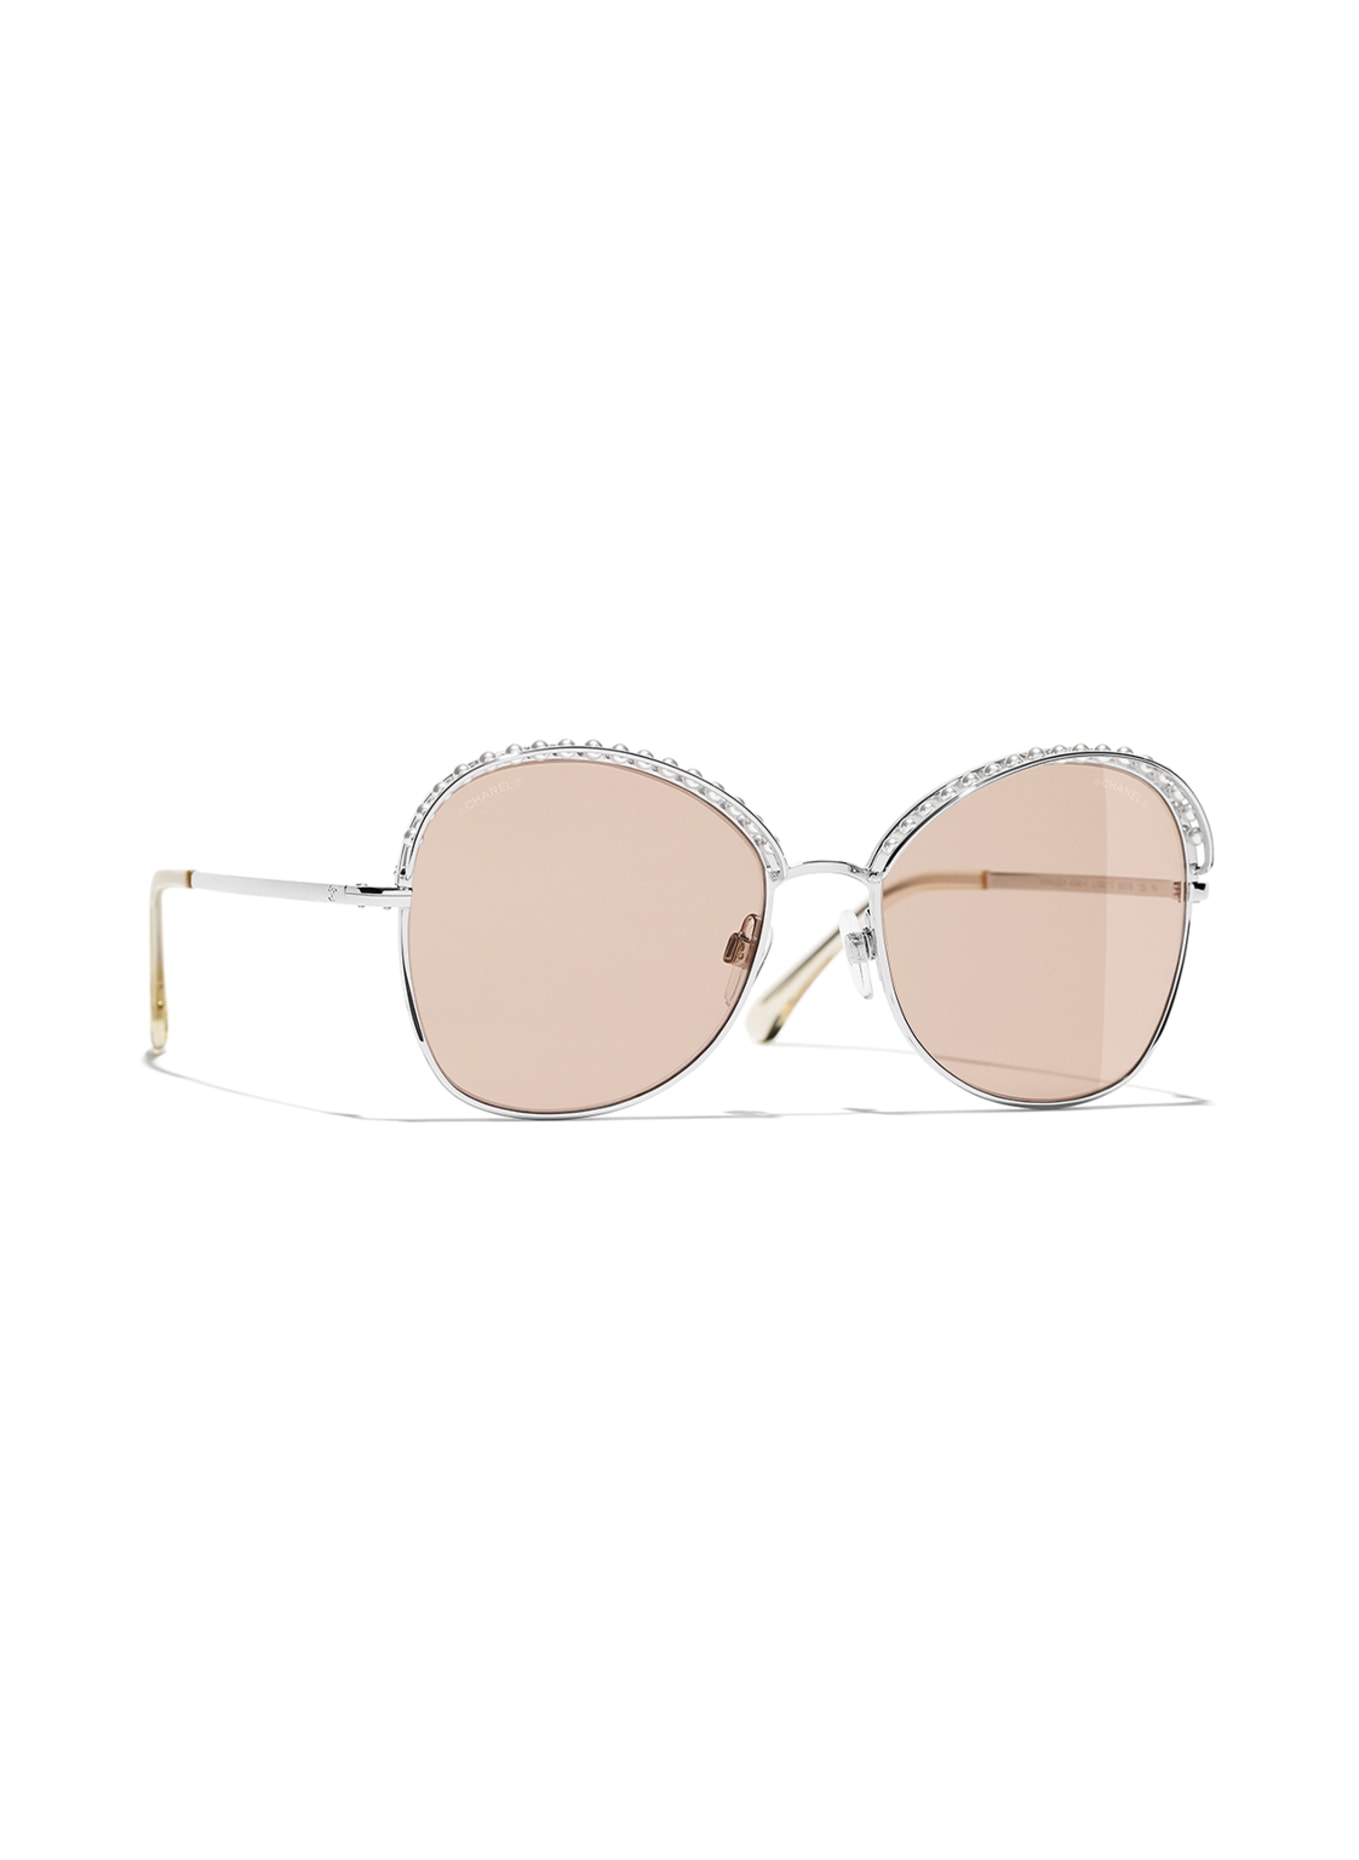 CHANEL Round sunglasses in c12473 - silver/ rose